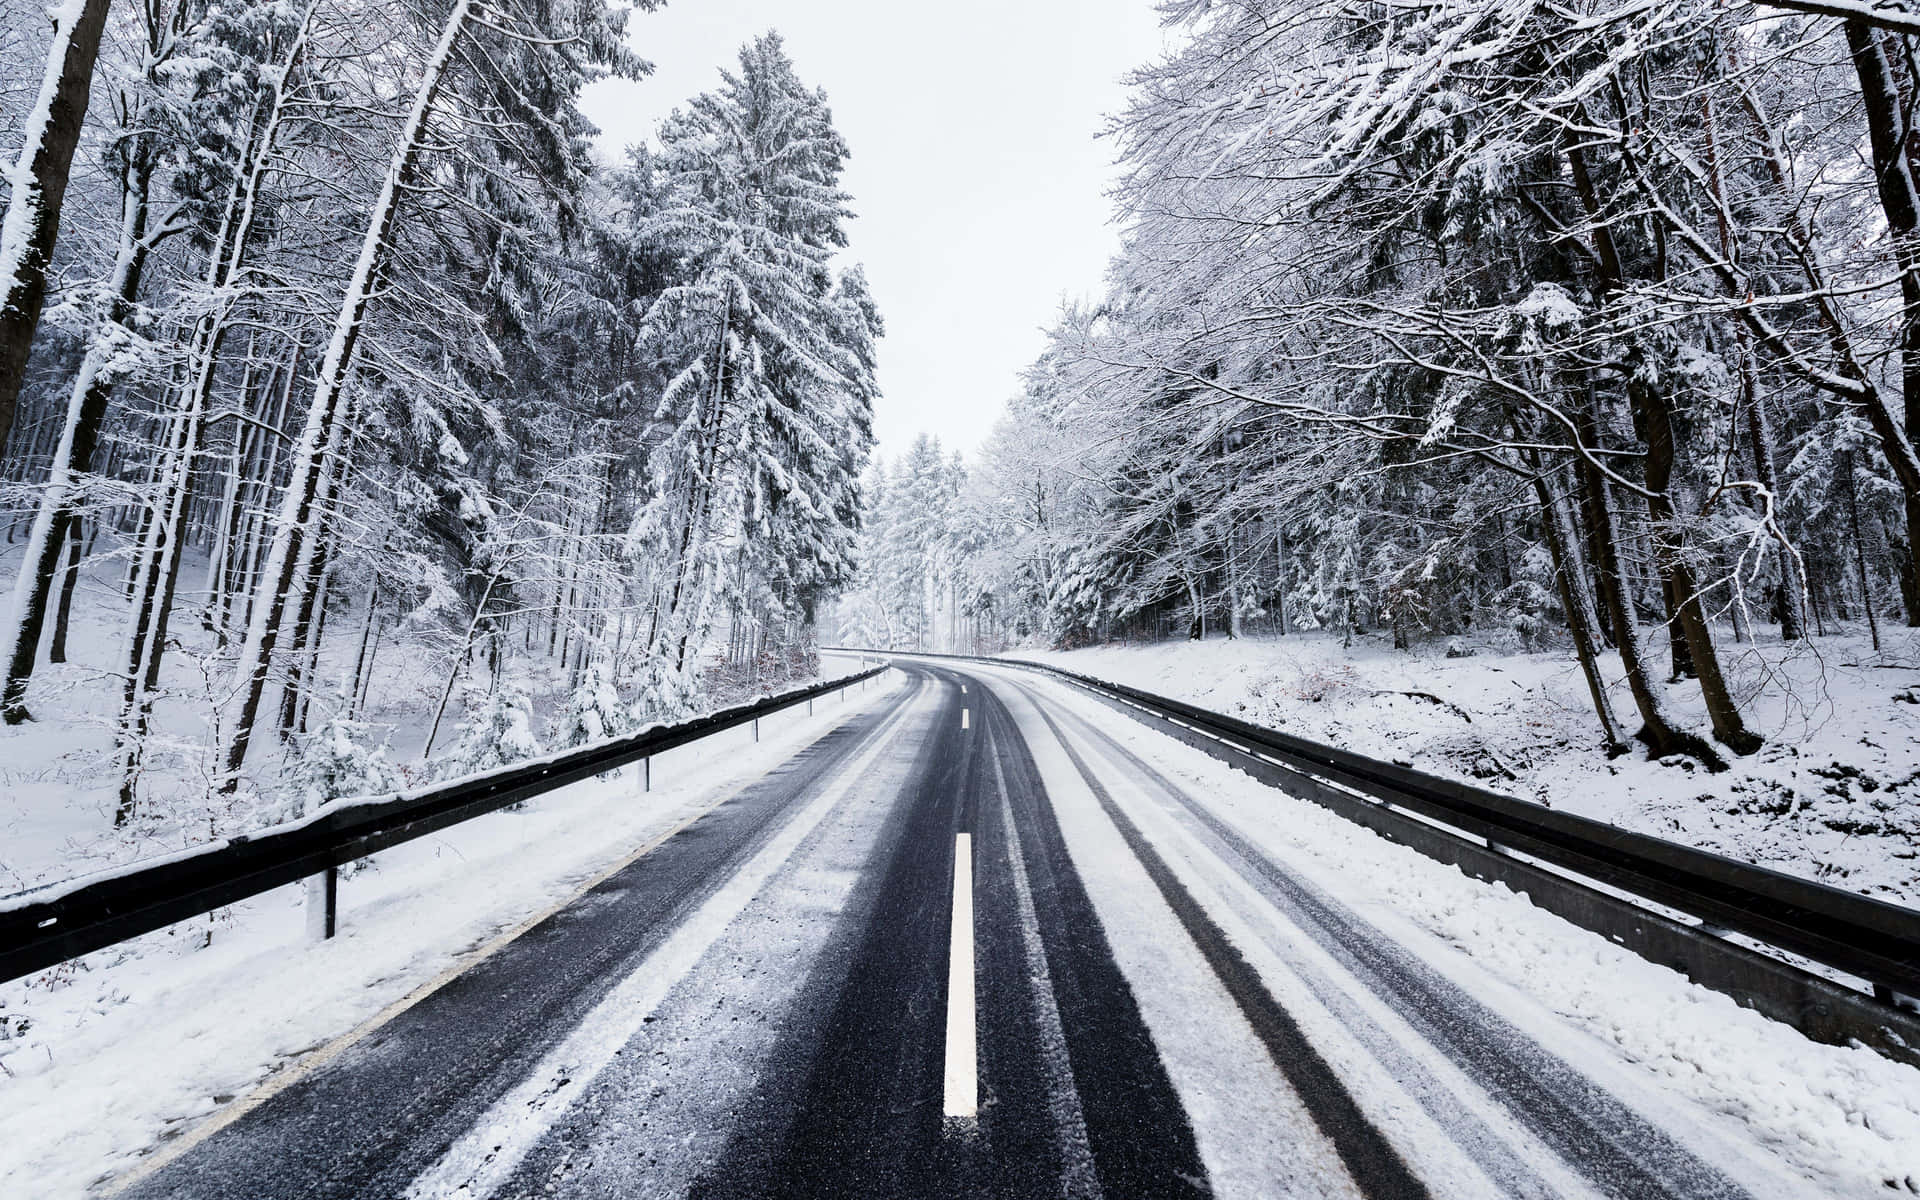 Tranquil Snowy Road Through a Winter Wonderland Wallpaper